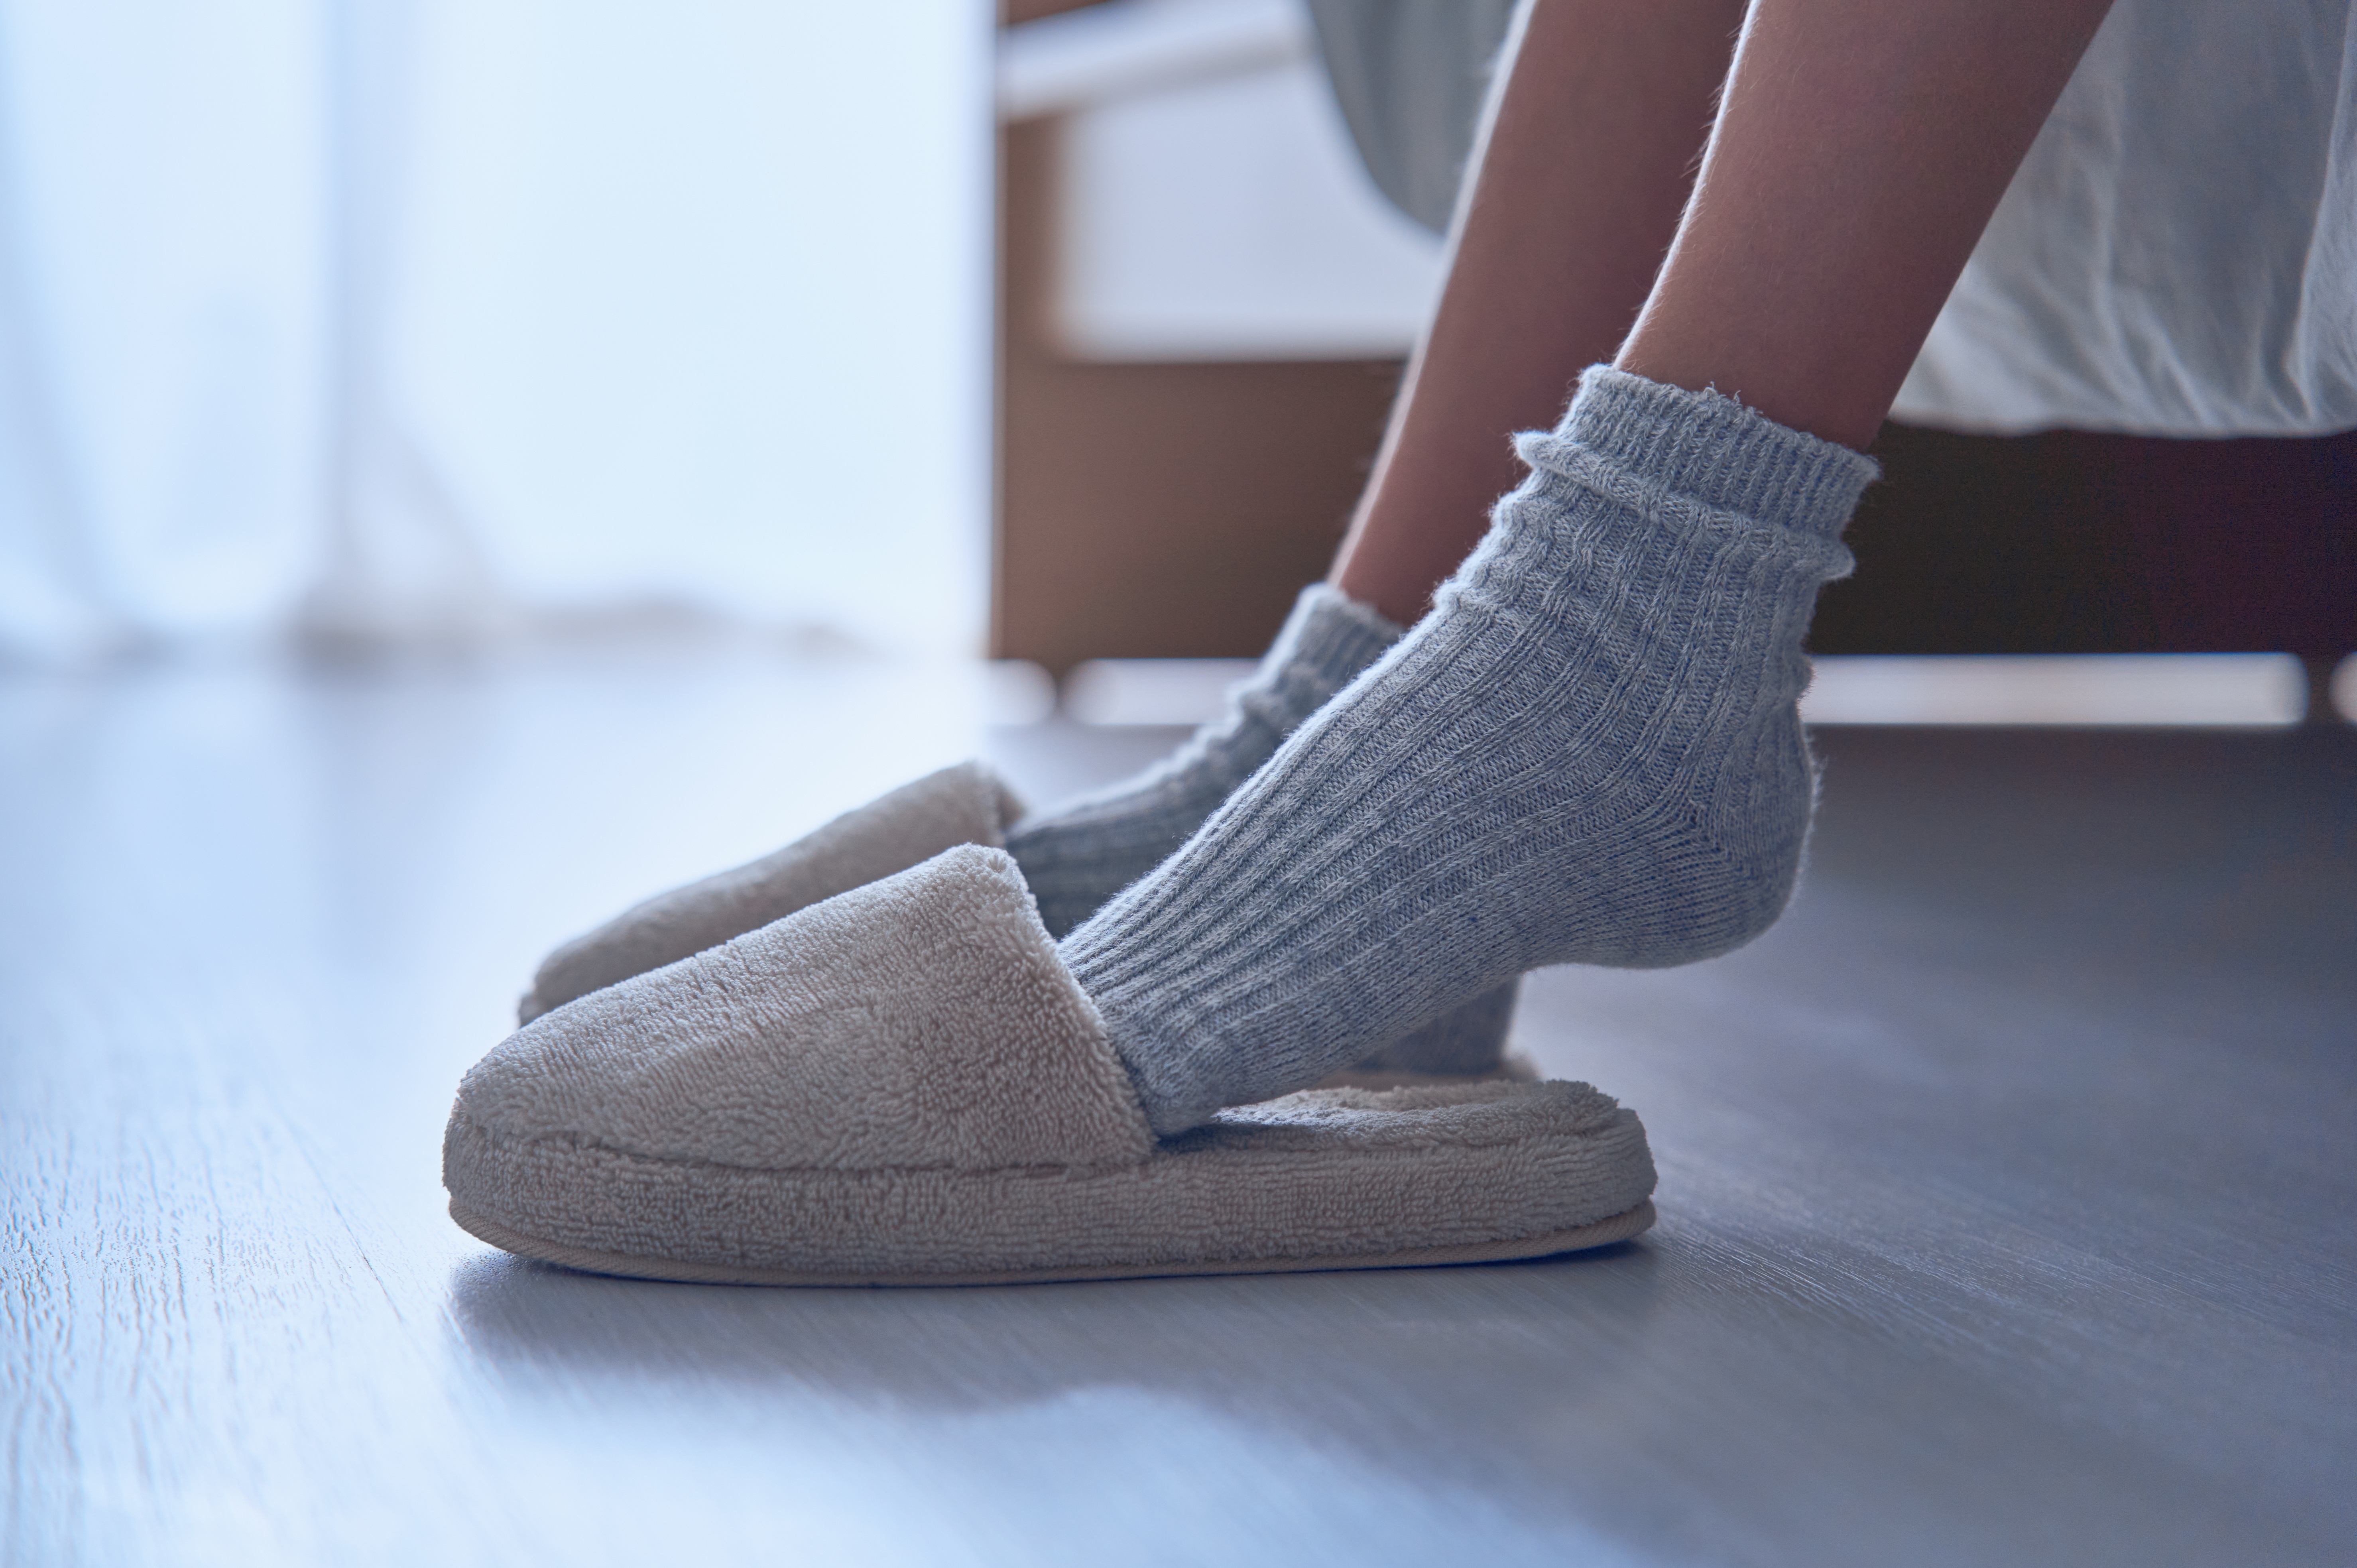 Children's feet in warm socks and slippers. | Source: Shutterstock